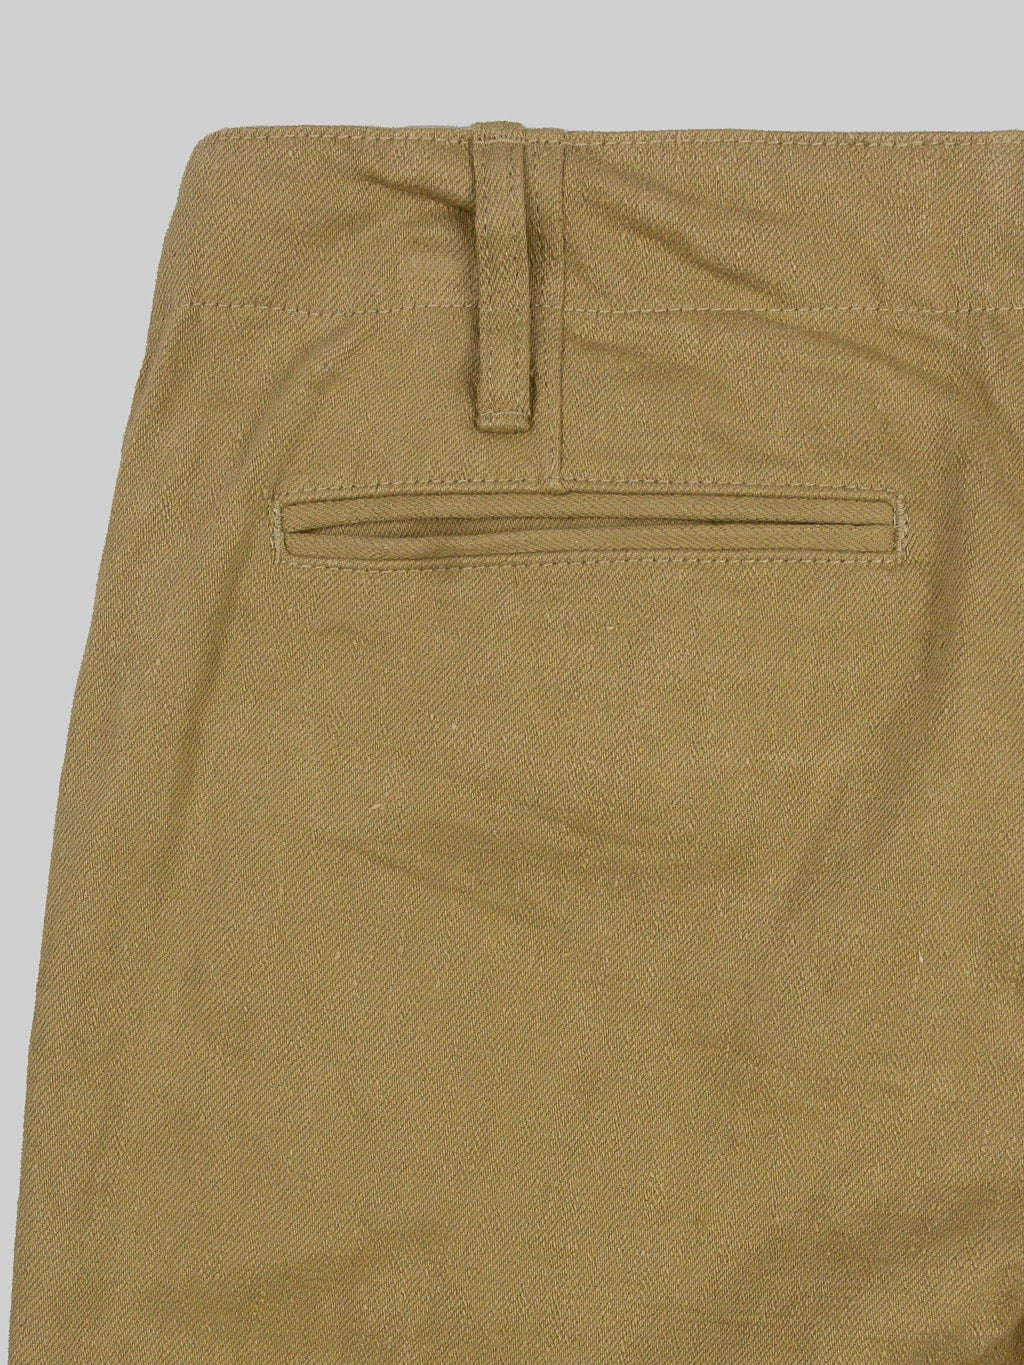 ONI Denim 727 Super Low Tension khaki beige straight Chino back pocket